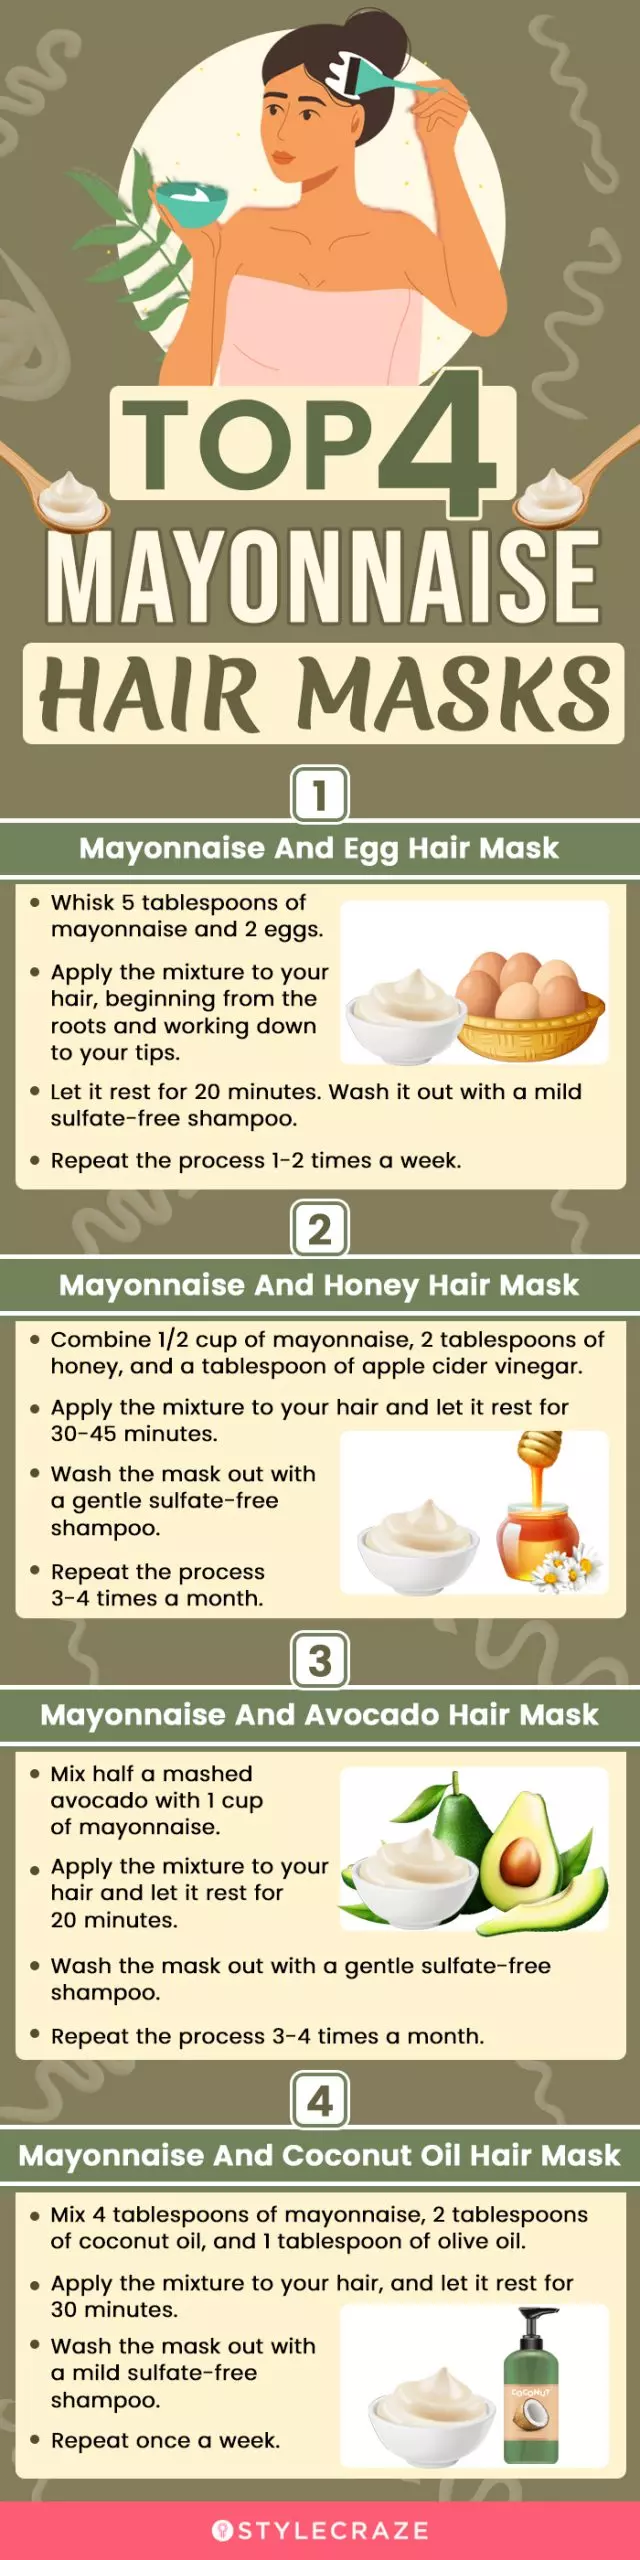 top 4 mayonnaise hair masks (infographic)